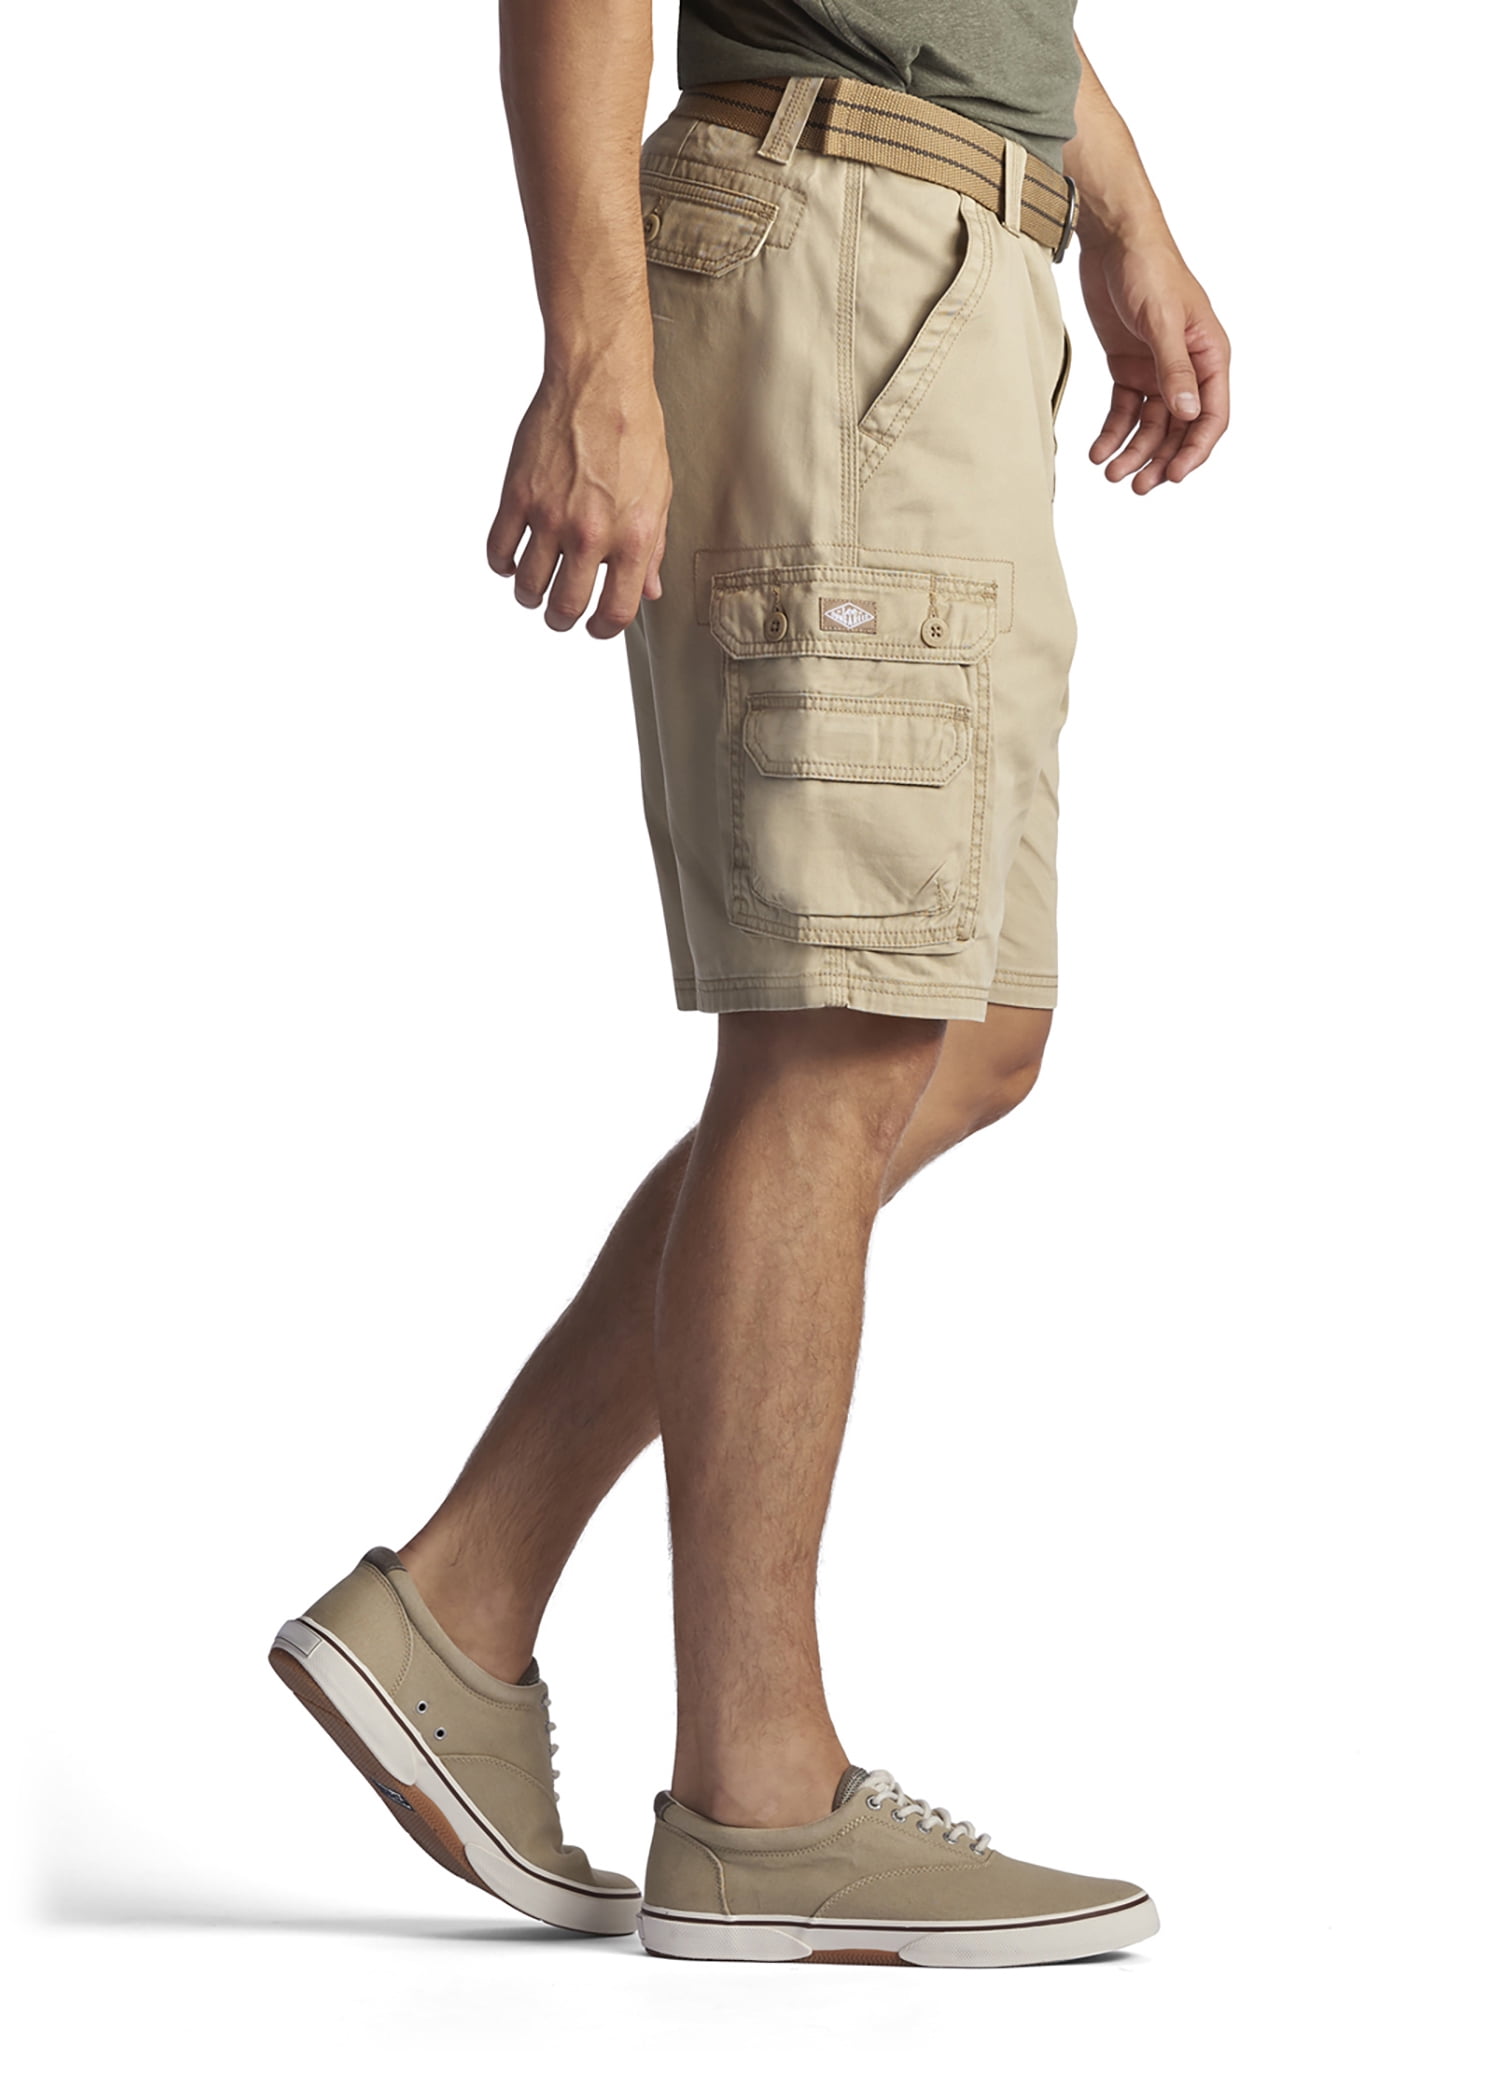 Vintage Lee dungarees cargo shorts men's 38 khaki tan thick cotton outdoor